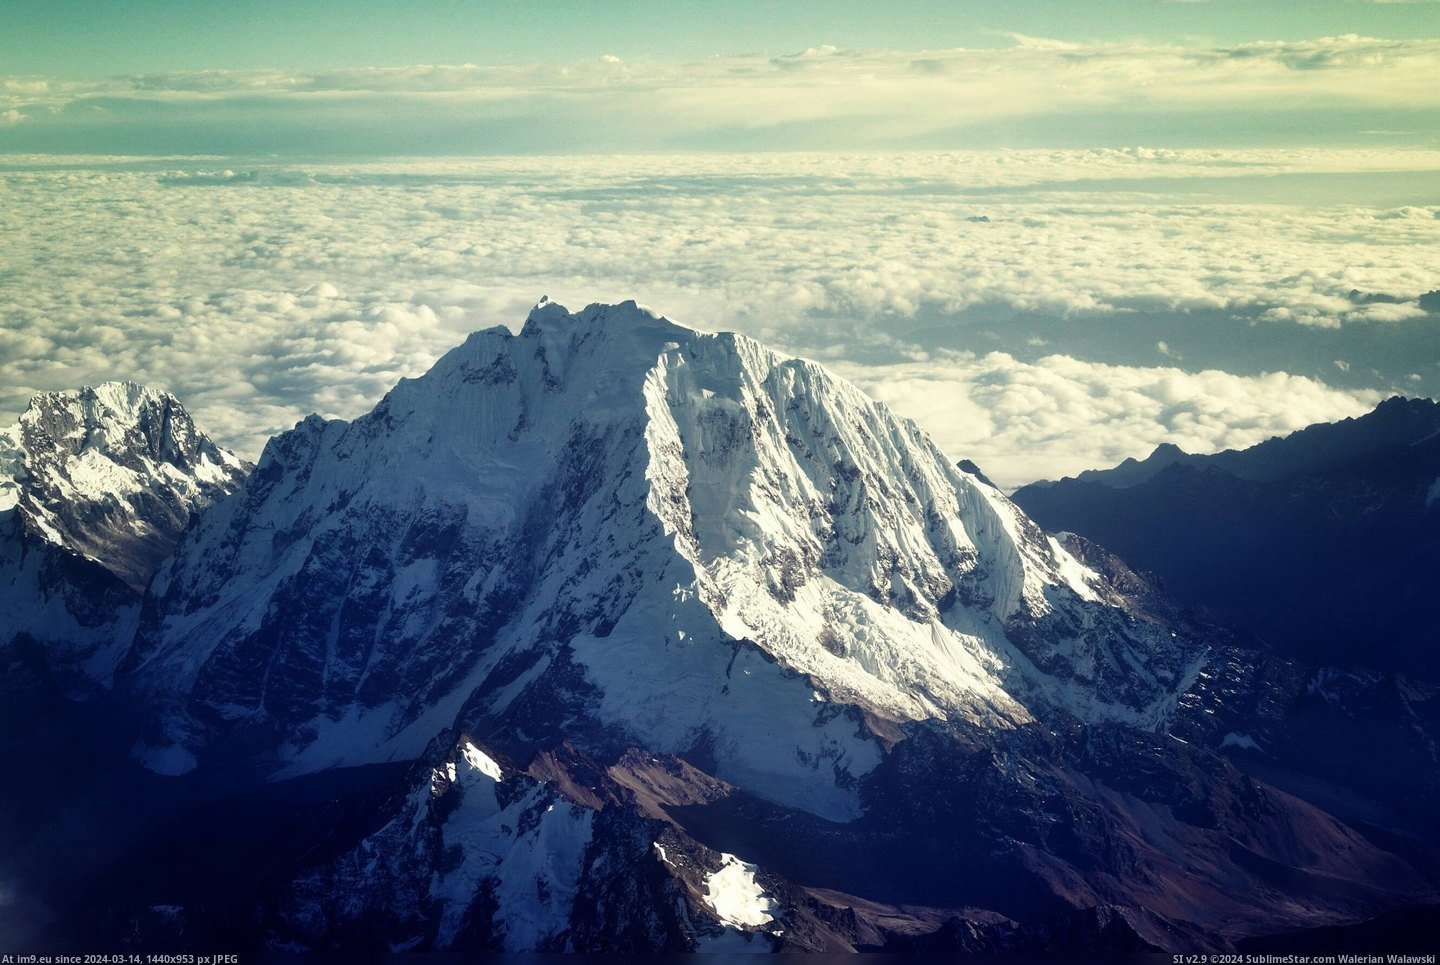  #Peru  [Earthporn] Mt Salkantay - Outside Cuzco, Peru  [2658x1772] Pic. (Image of album My r/EARTHPORN favs))